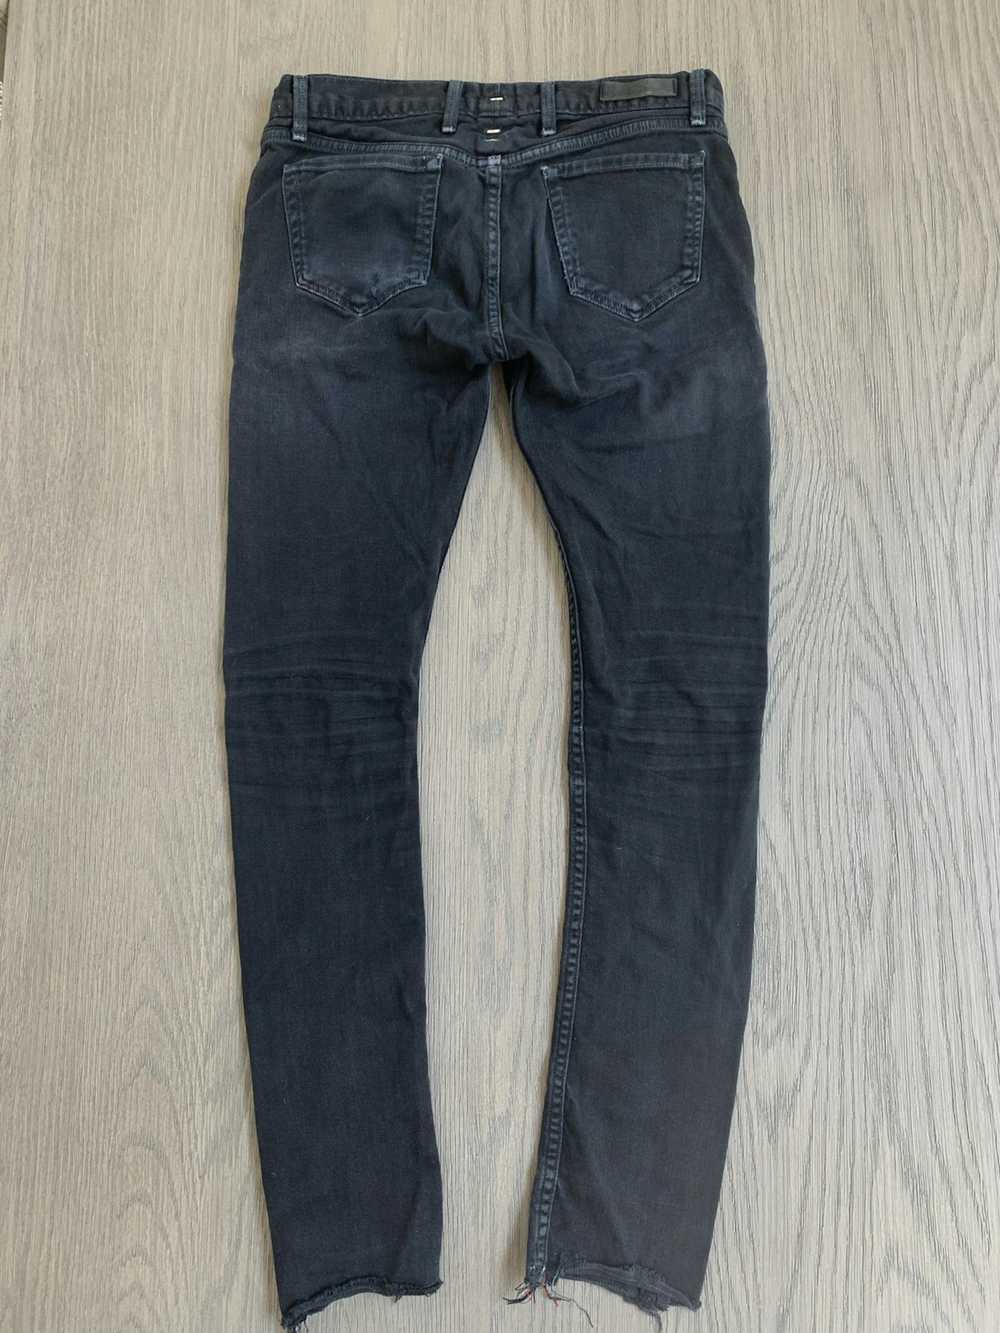 Mr. Completely Mr. Completely Skinny Black jeans - image 8